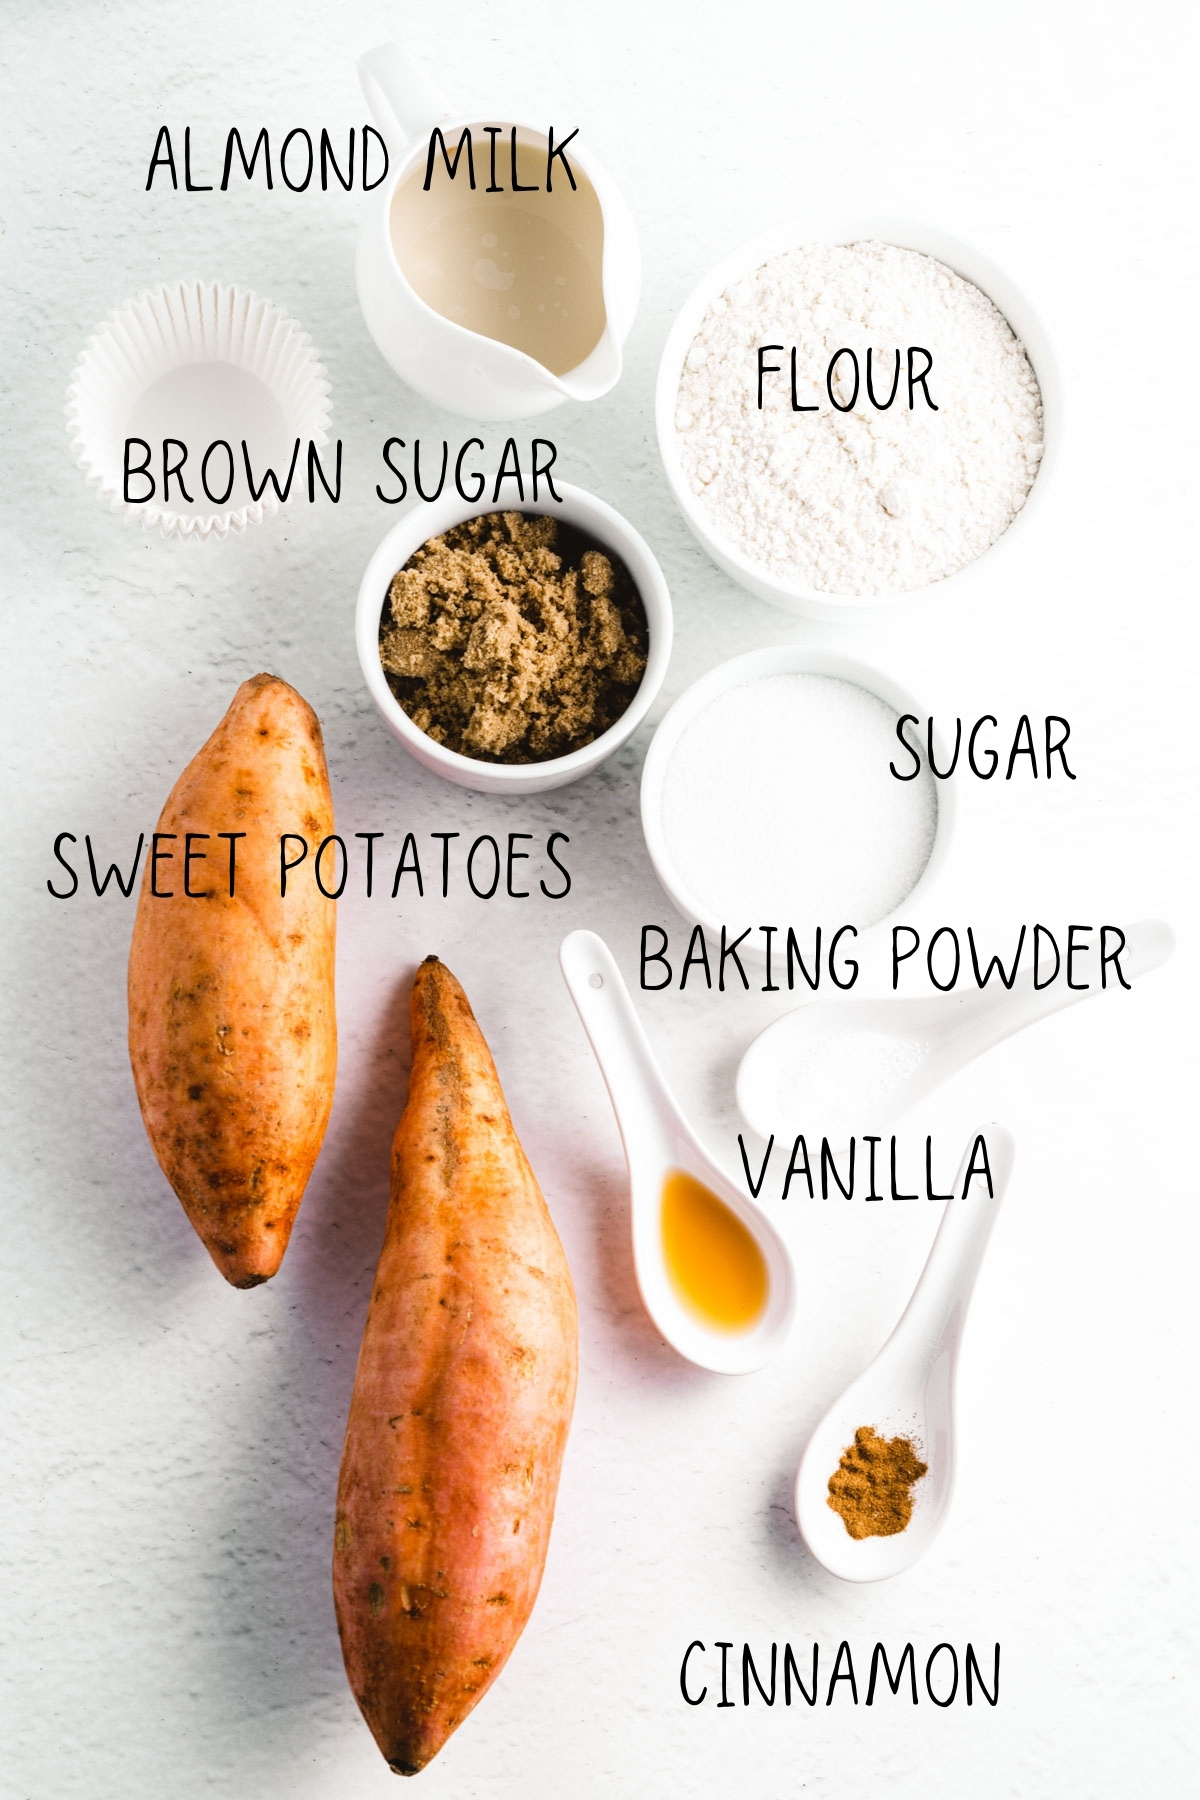 sweet potato muffin ingredients, including brown sugar, cinnamon, almond milk, and cinnamon